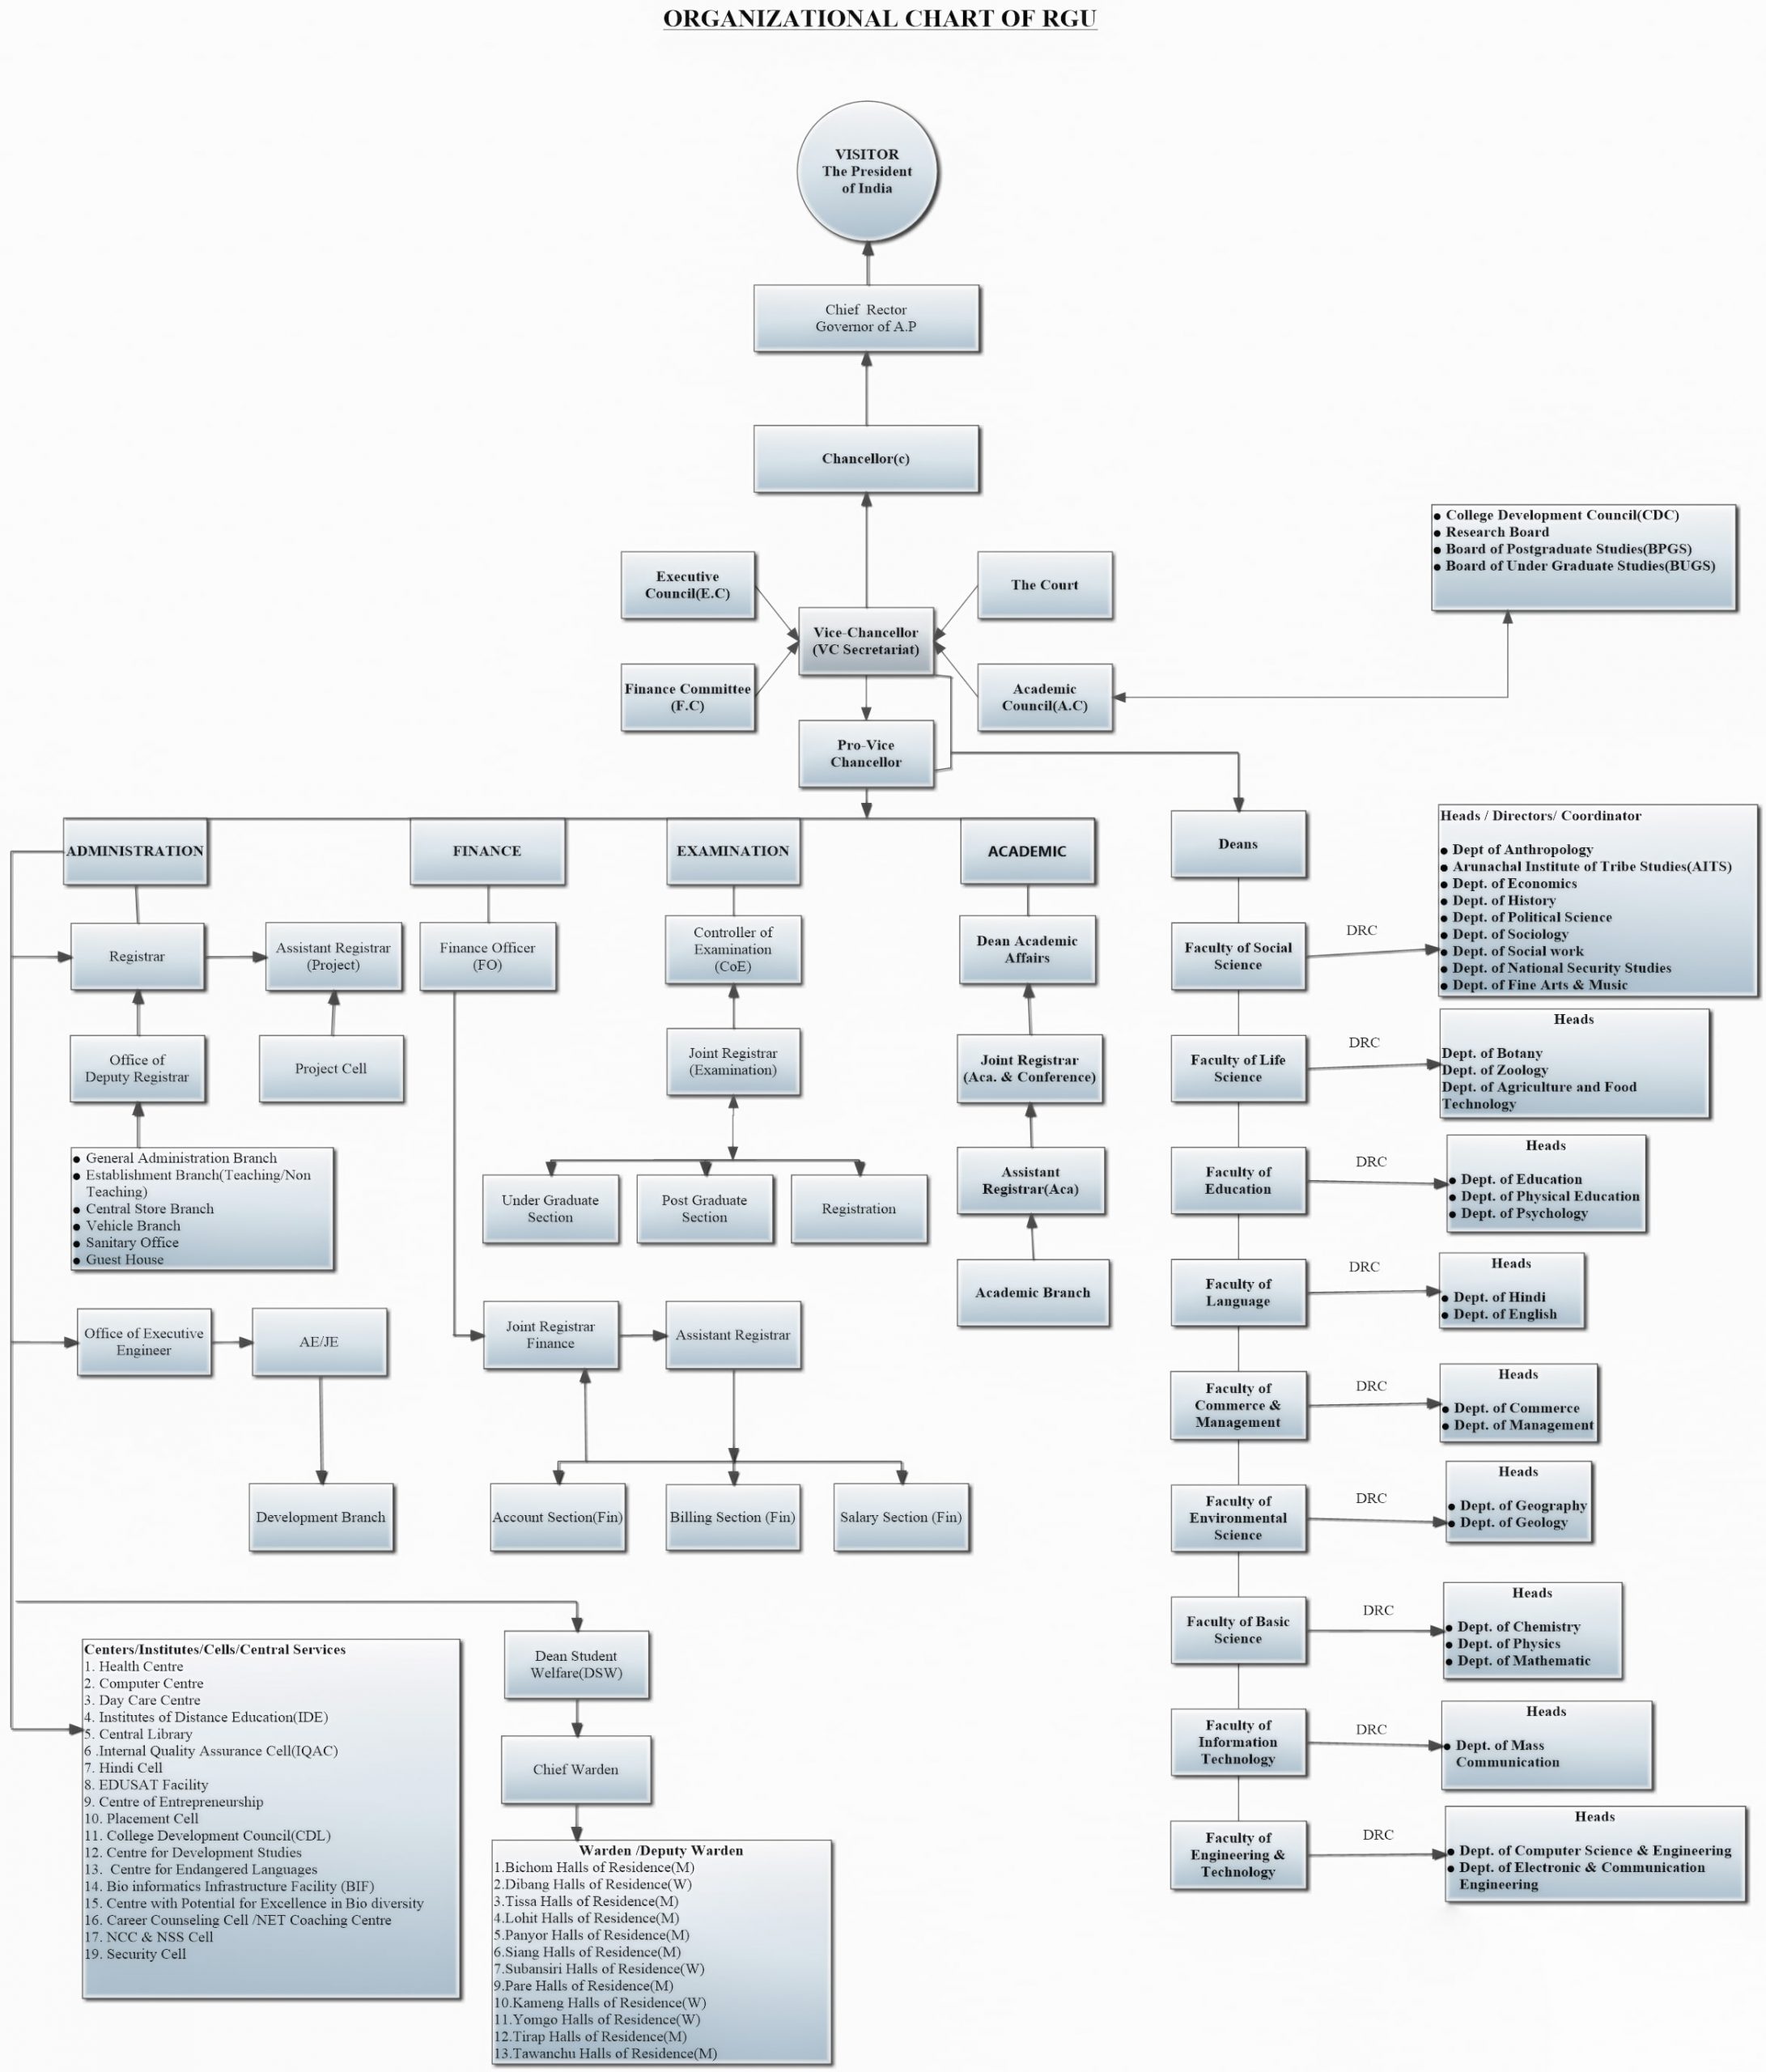 Organisation-Chart-of-RGU-min